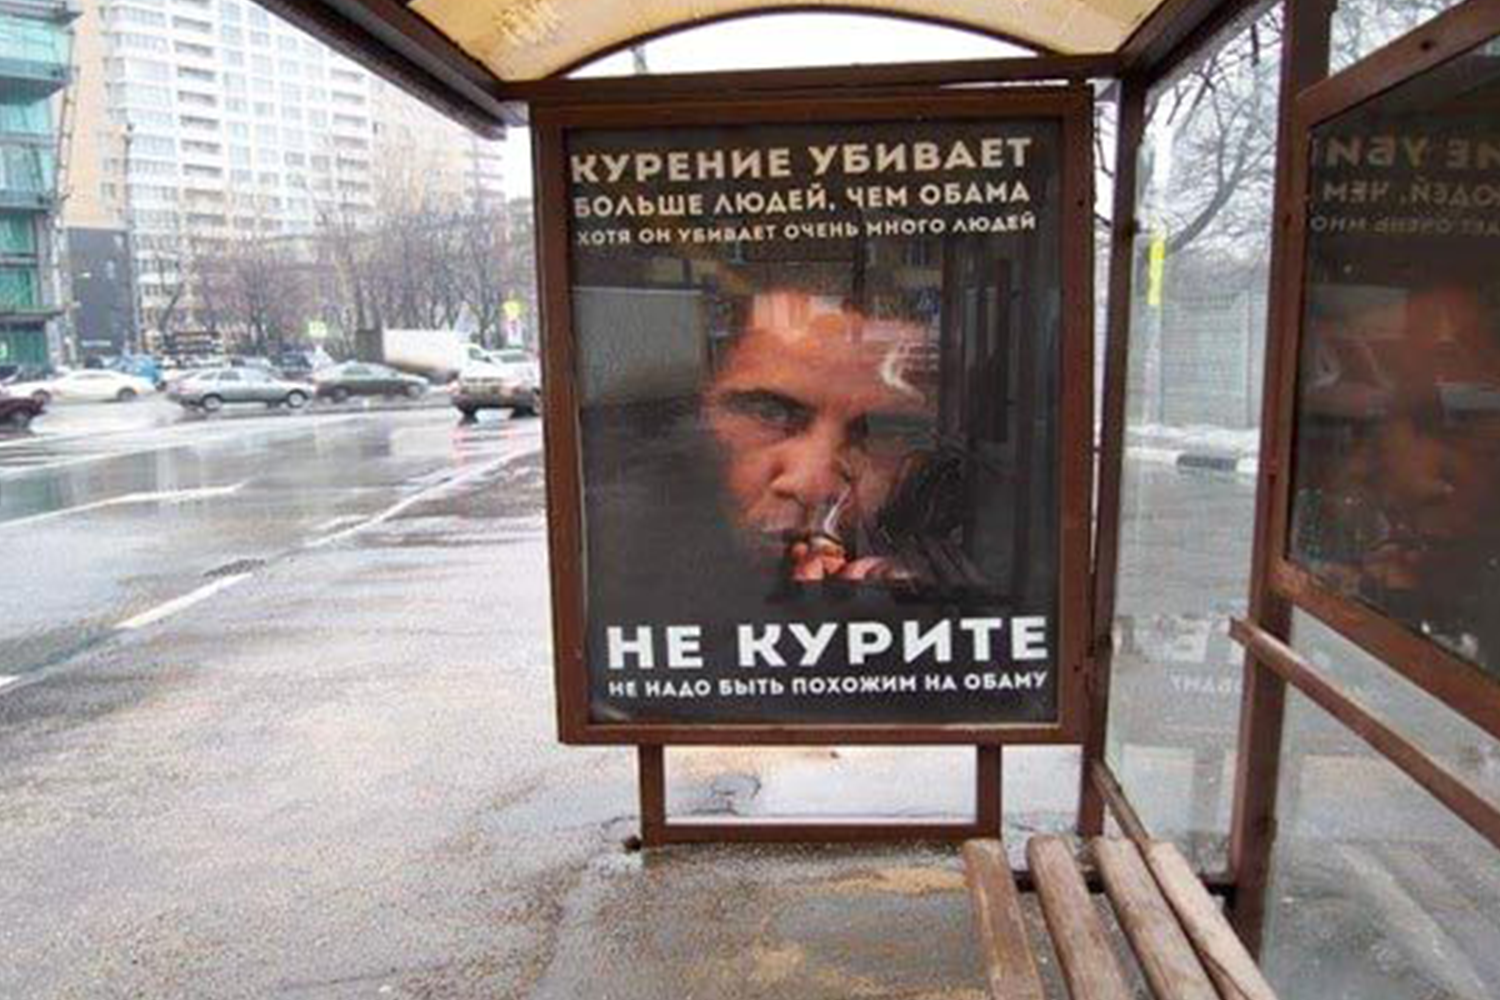 Campaña anti tabaco en Rusia: “Fumar mata más personas que Obama”